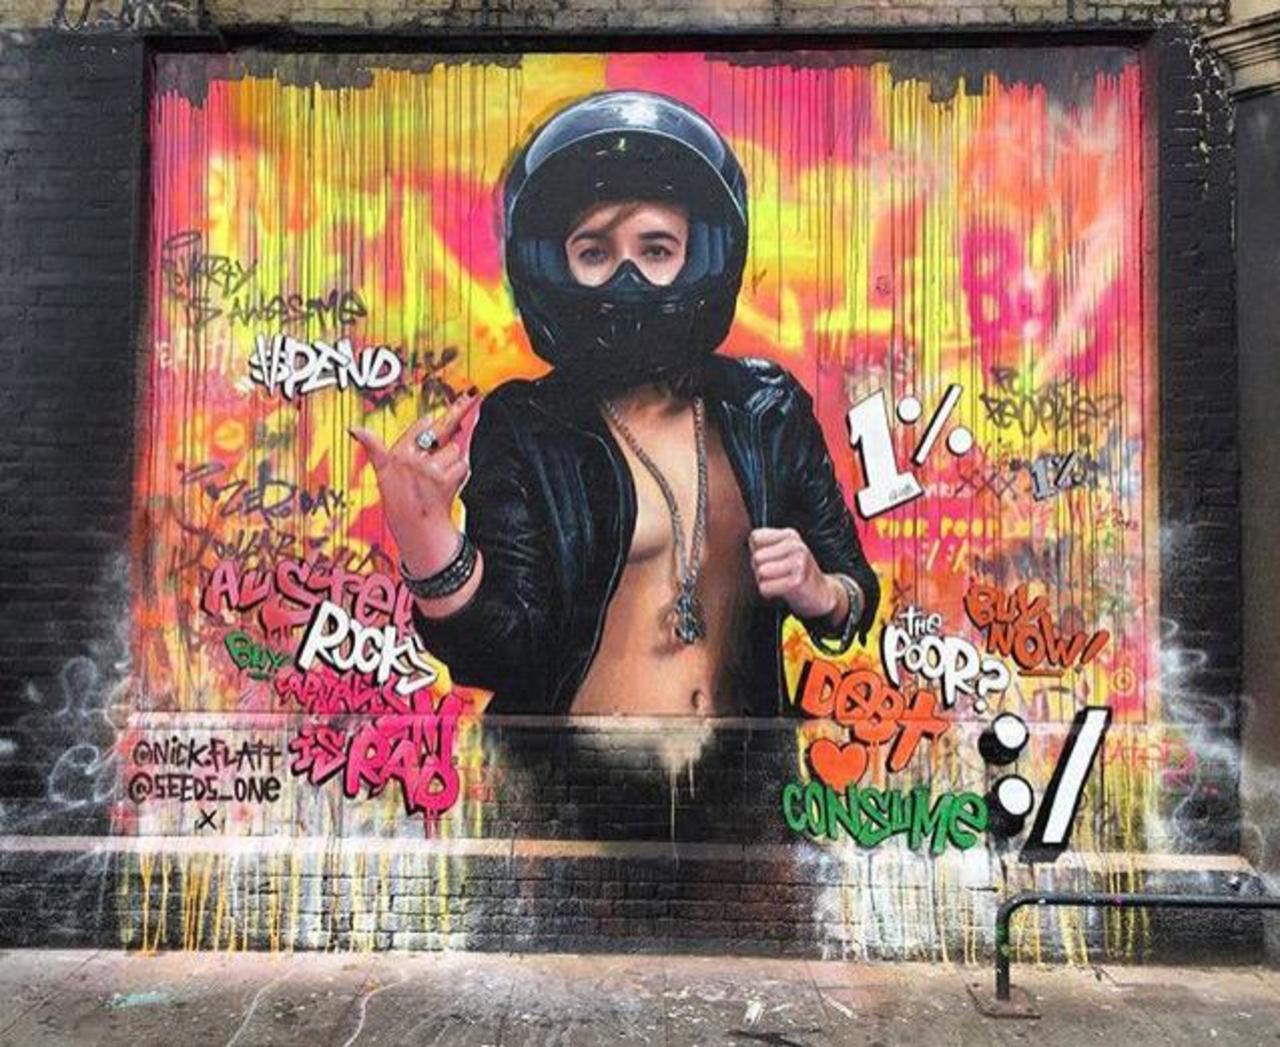 New Street Art collab by Nick Flatt &  Seeds One in London 

#art #graffiti #mural #streetart http://t.co/iUXqpJ05Ja